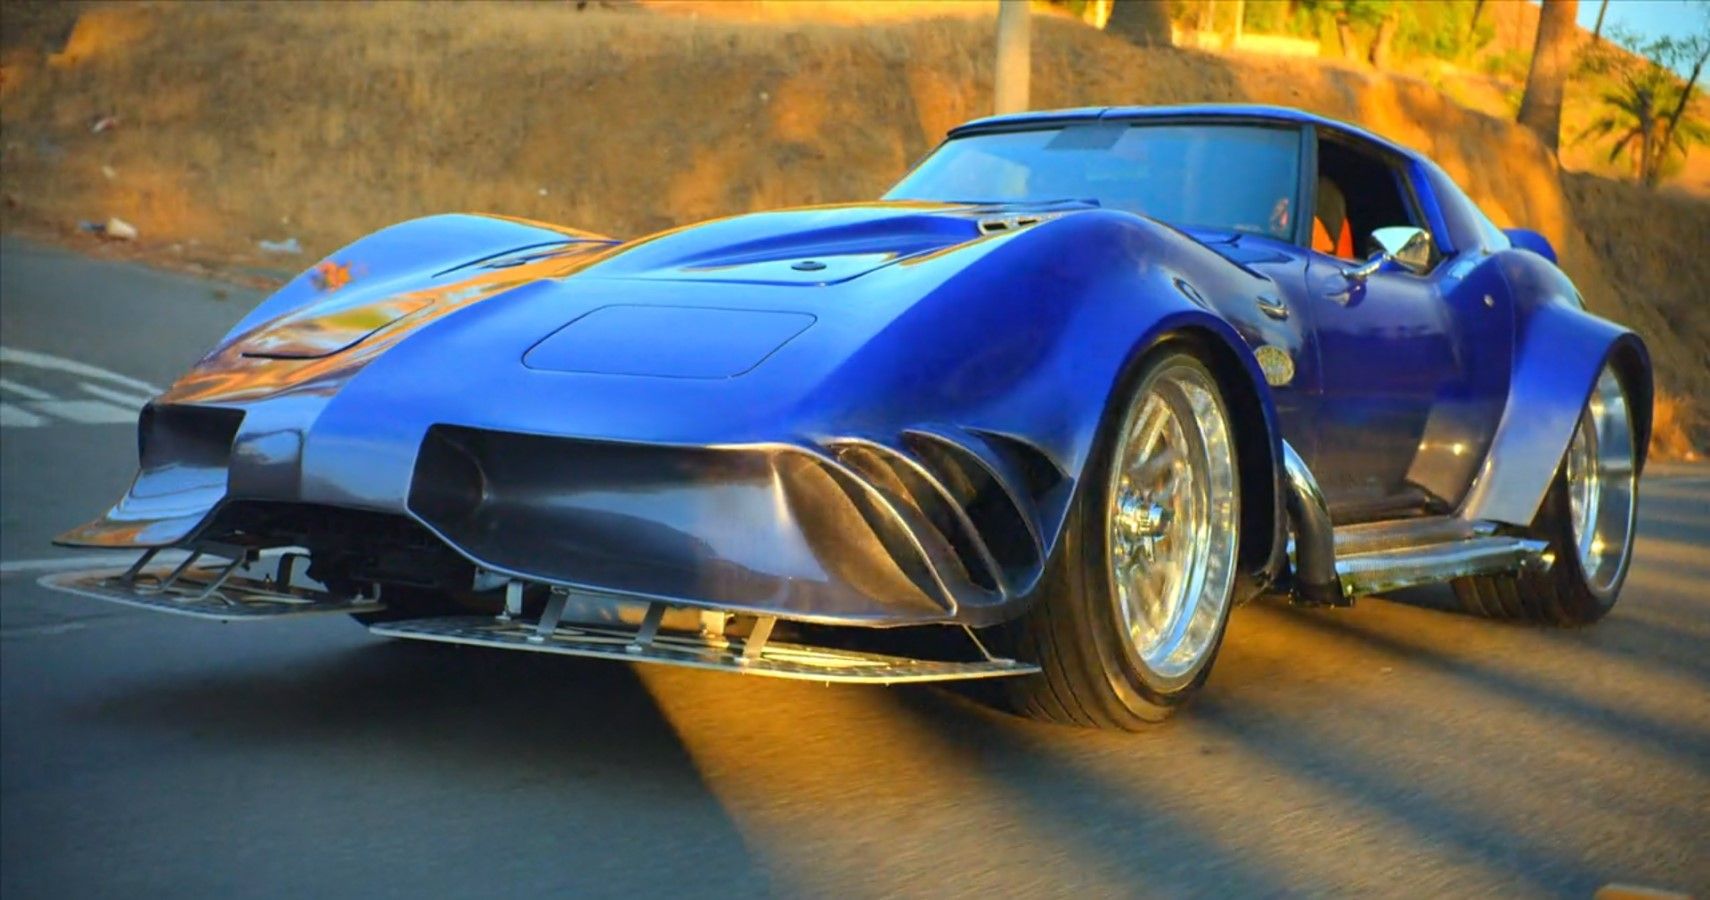 Gotham Garage Chevy Corvette Mako Shark 2 Build front third quarter rolling view